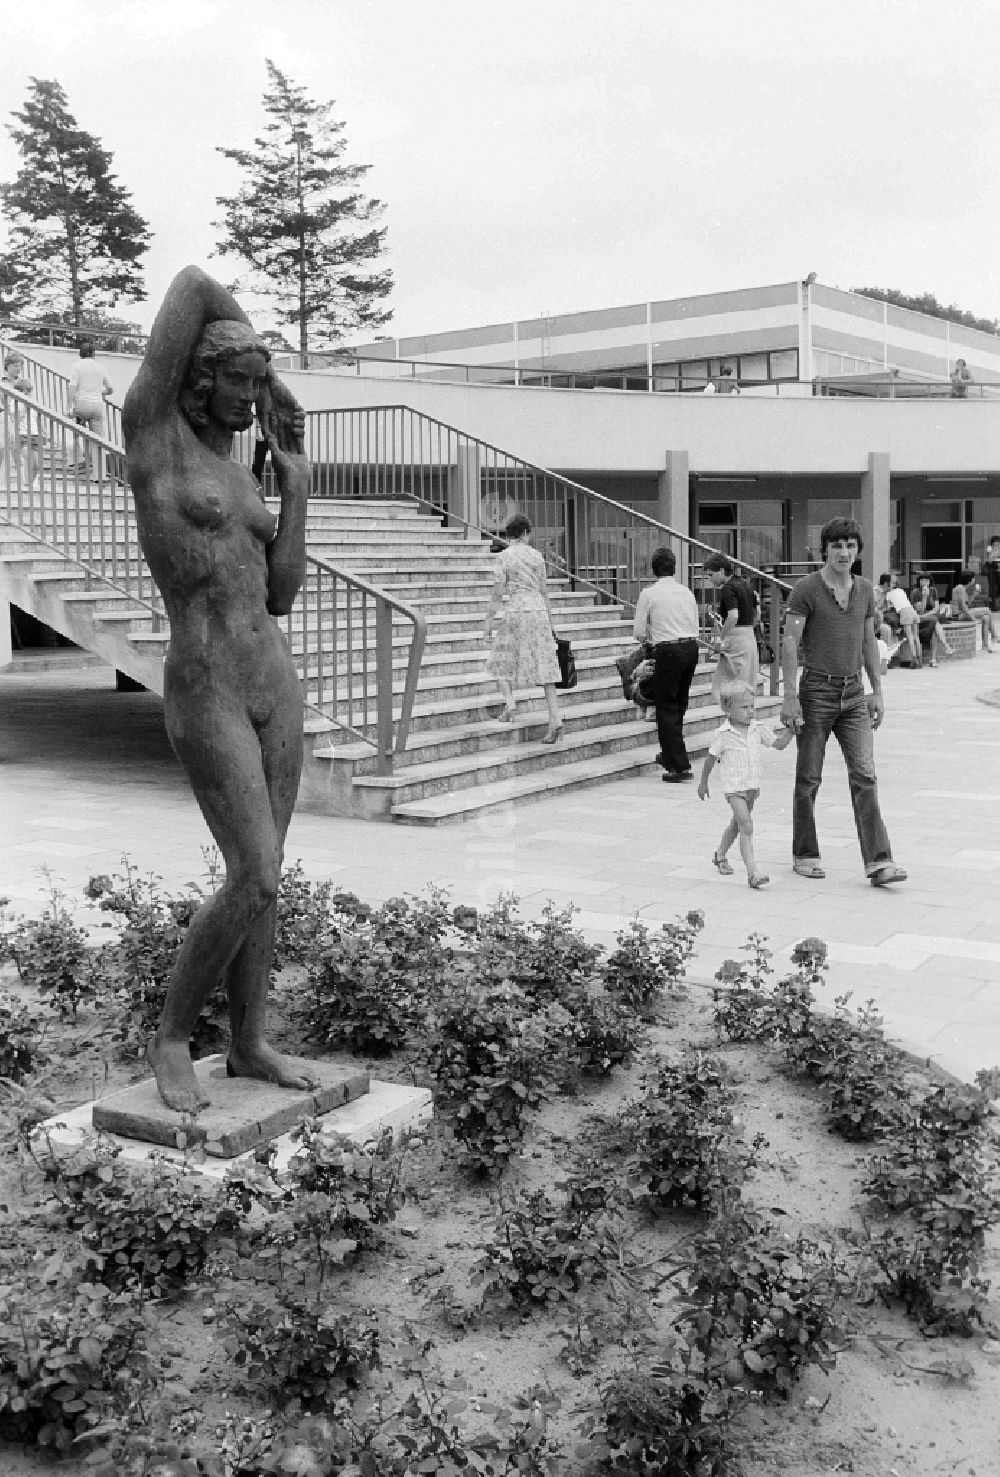 DDR-Fotoarchiv: Berlin - Bronzefigur im Strandbad Müggelsee in Berlin, der ehemaligen Hauptstadt der DDR, Deutsche Demokratische Republik